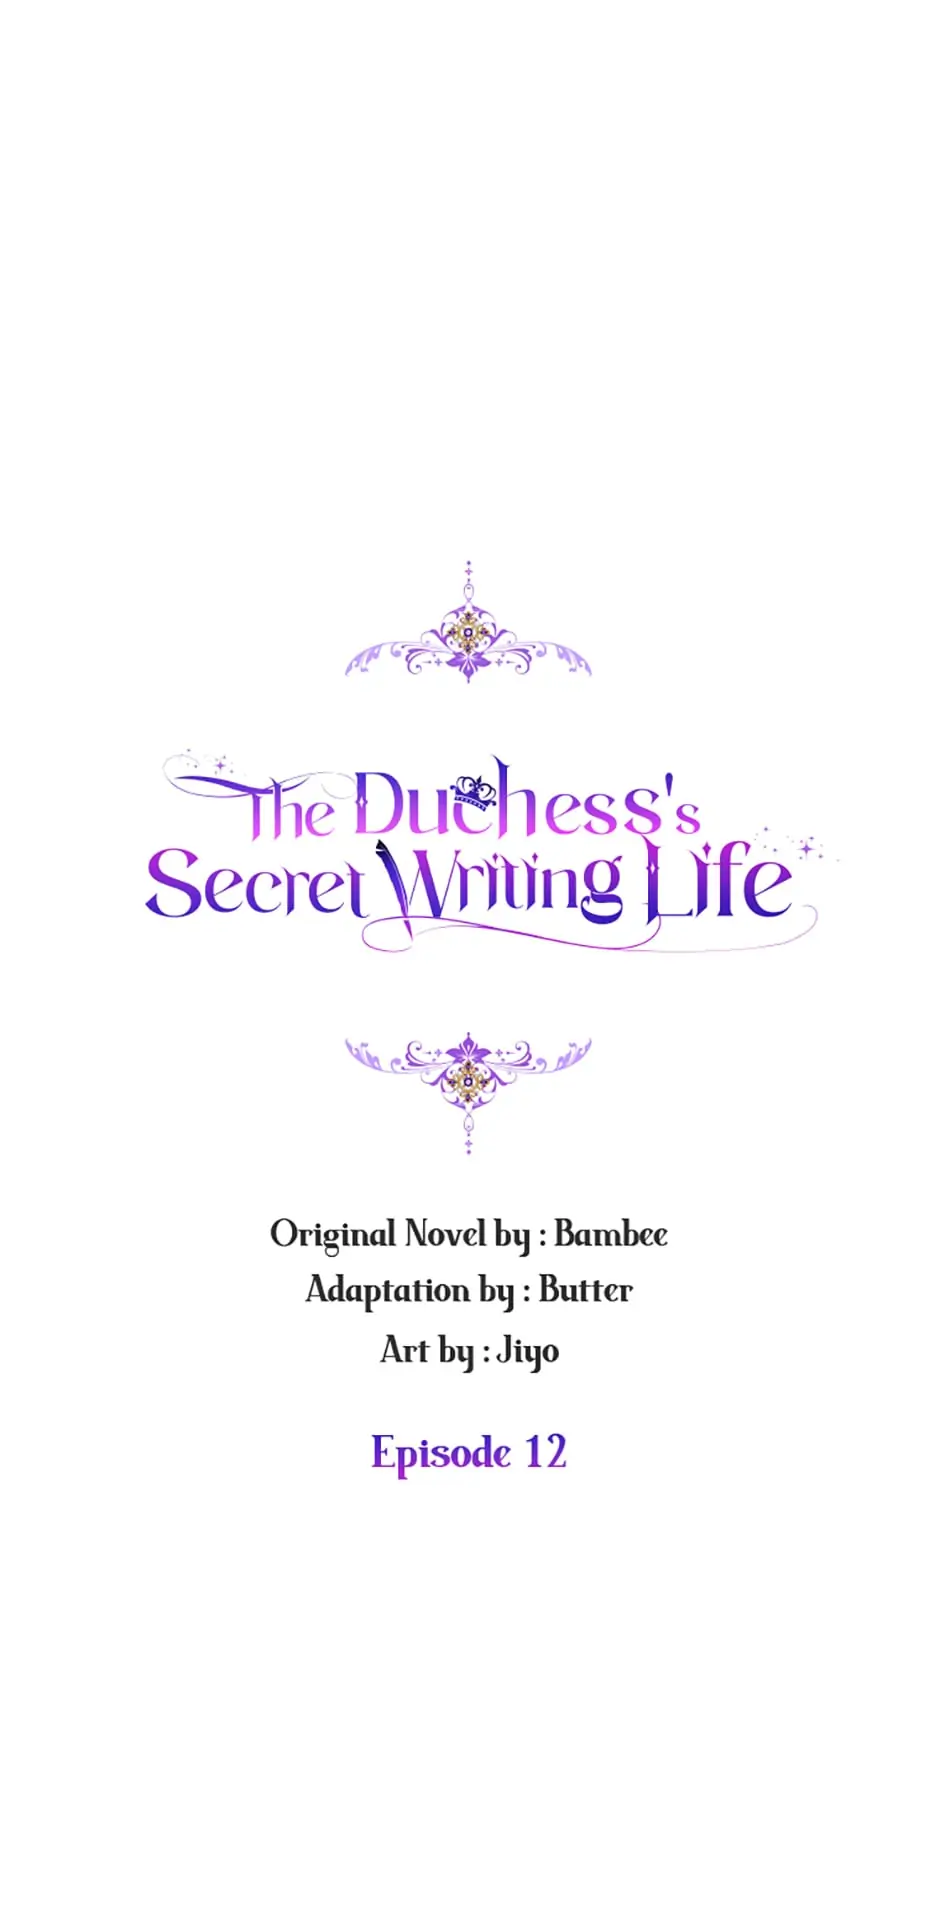 The Duchess’ Secret Writings chapter 12